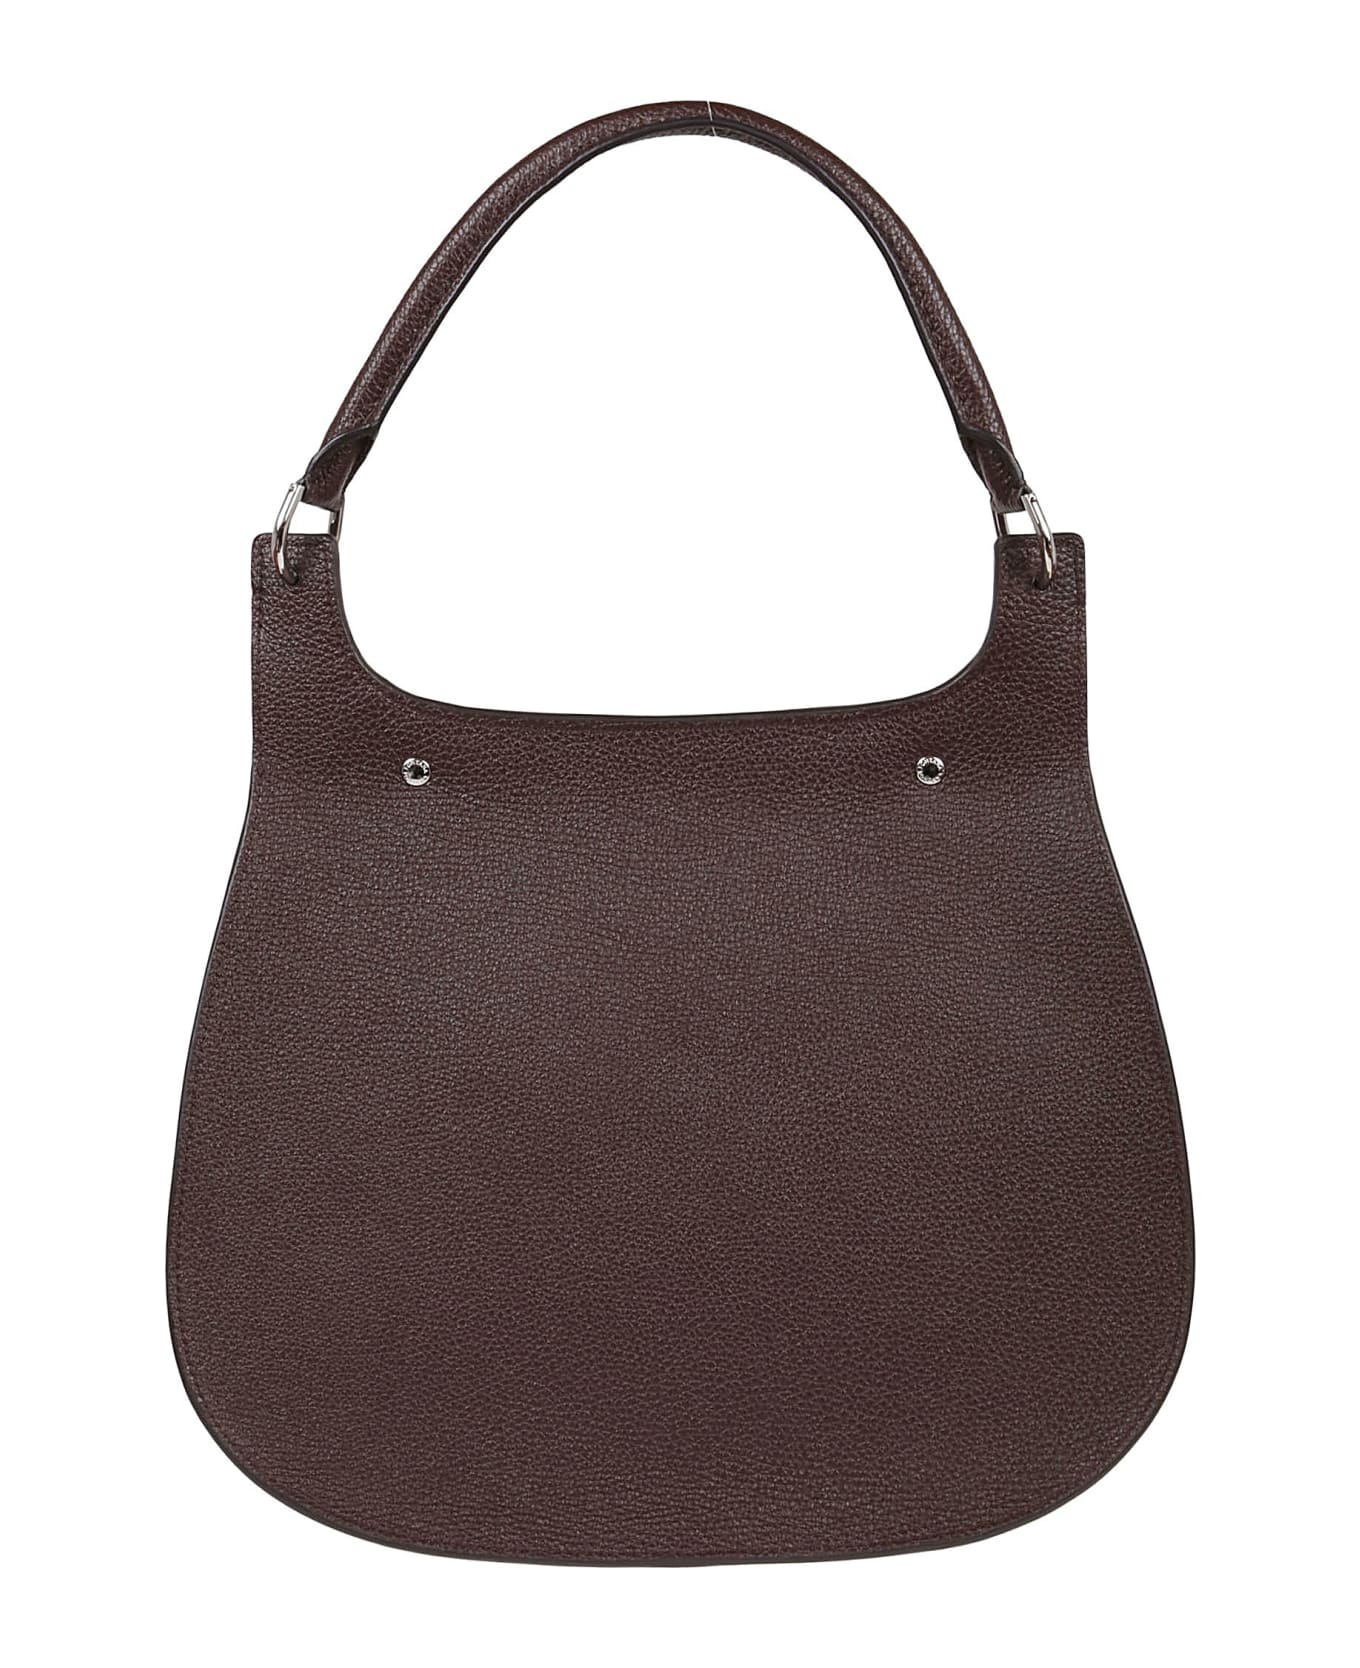 Fontana Couture Leather Bag - Mahogany